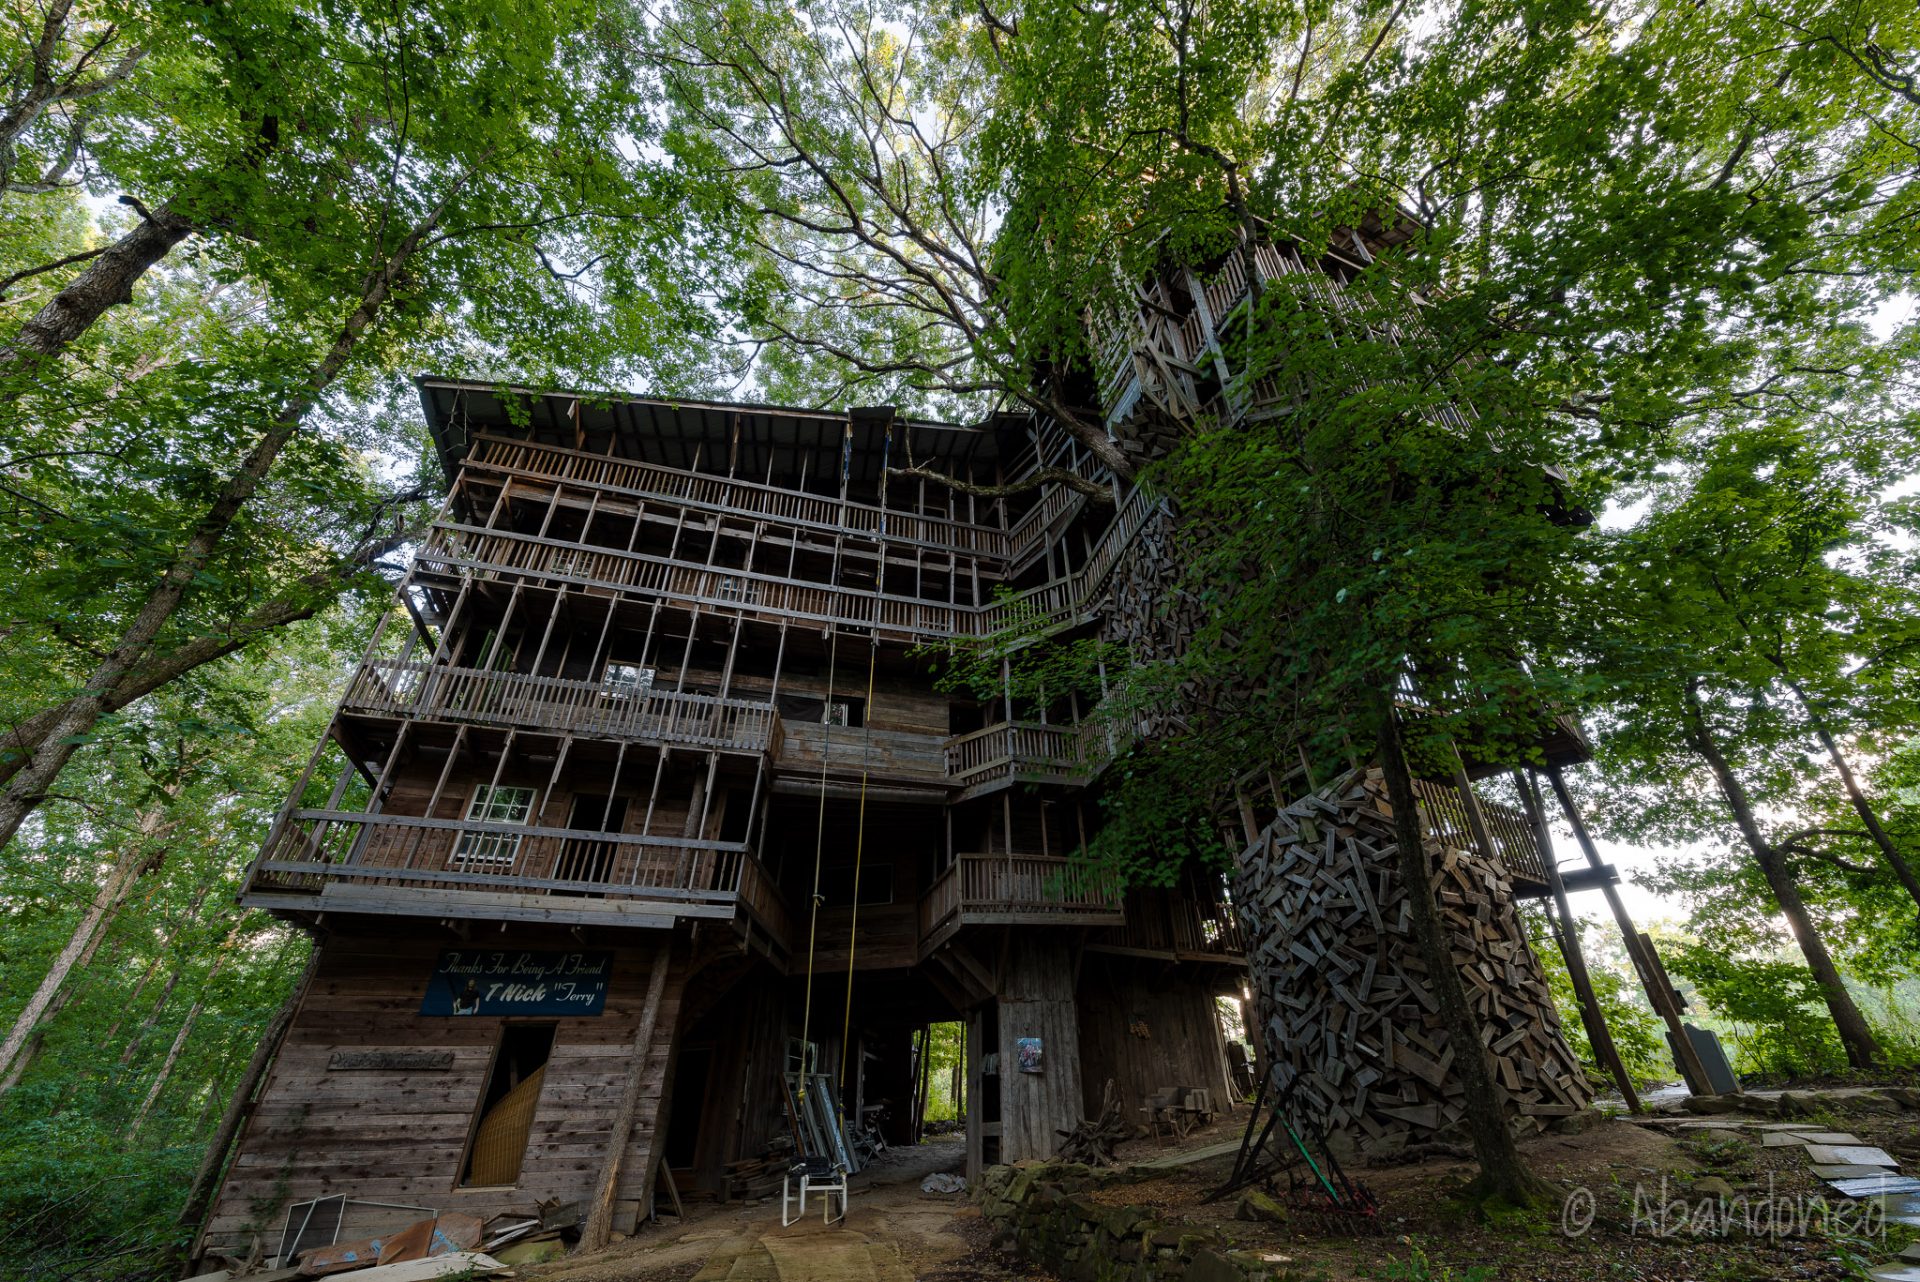 Horace Burgess's Treehouse